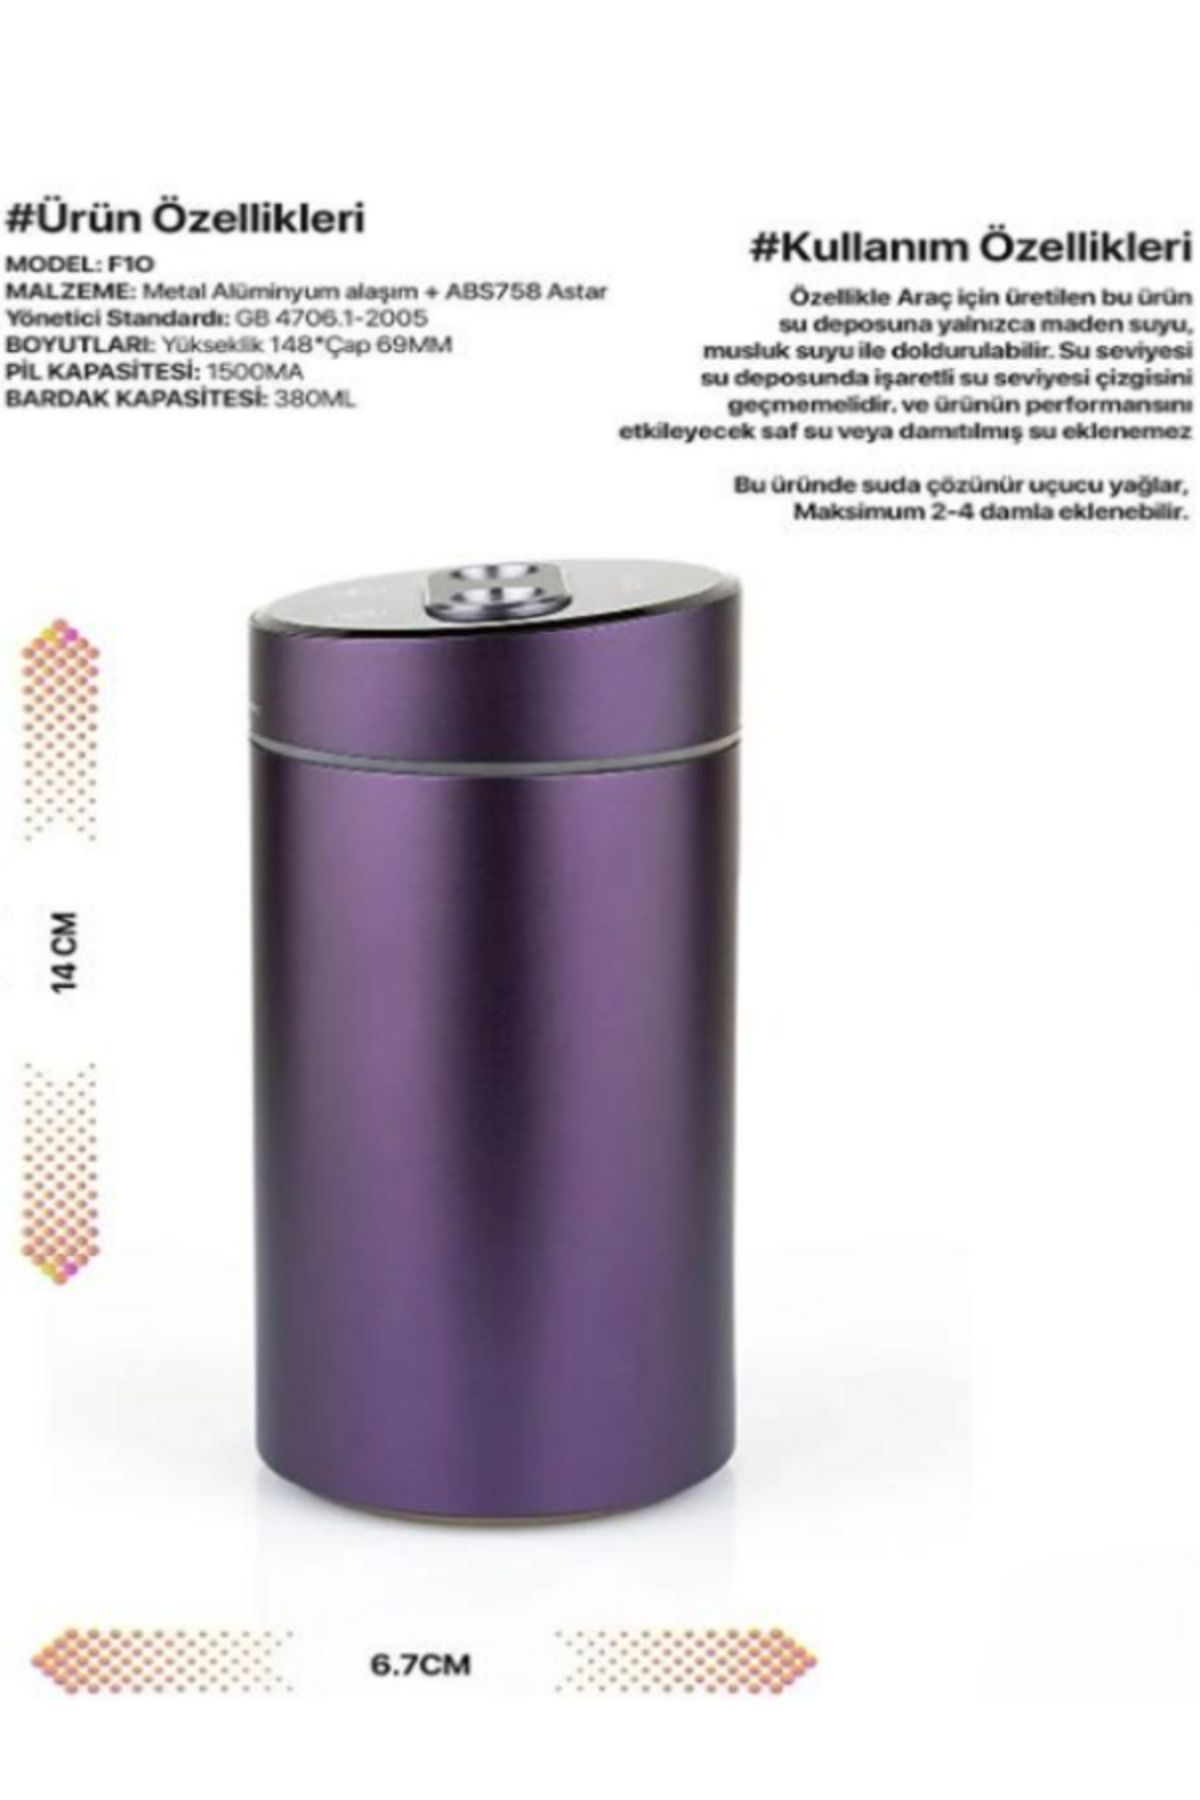 Summer Ticaret Summer H2o Humidifier 380 ml F10 Hava Nemlendiricisi Buhar Makinesi Ve Aroma Difüzörü - Mor